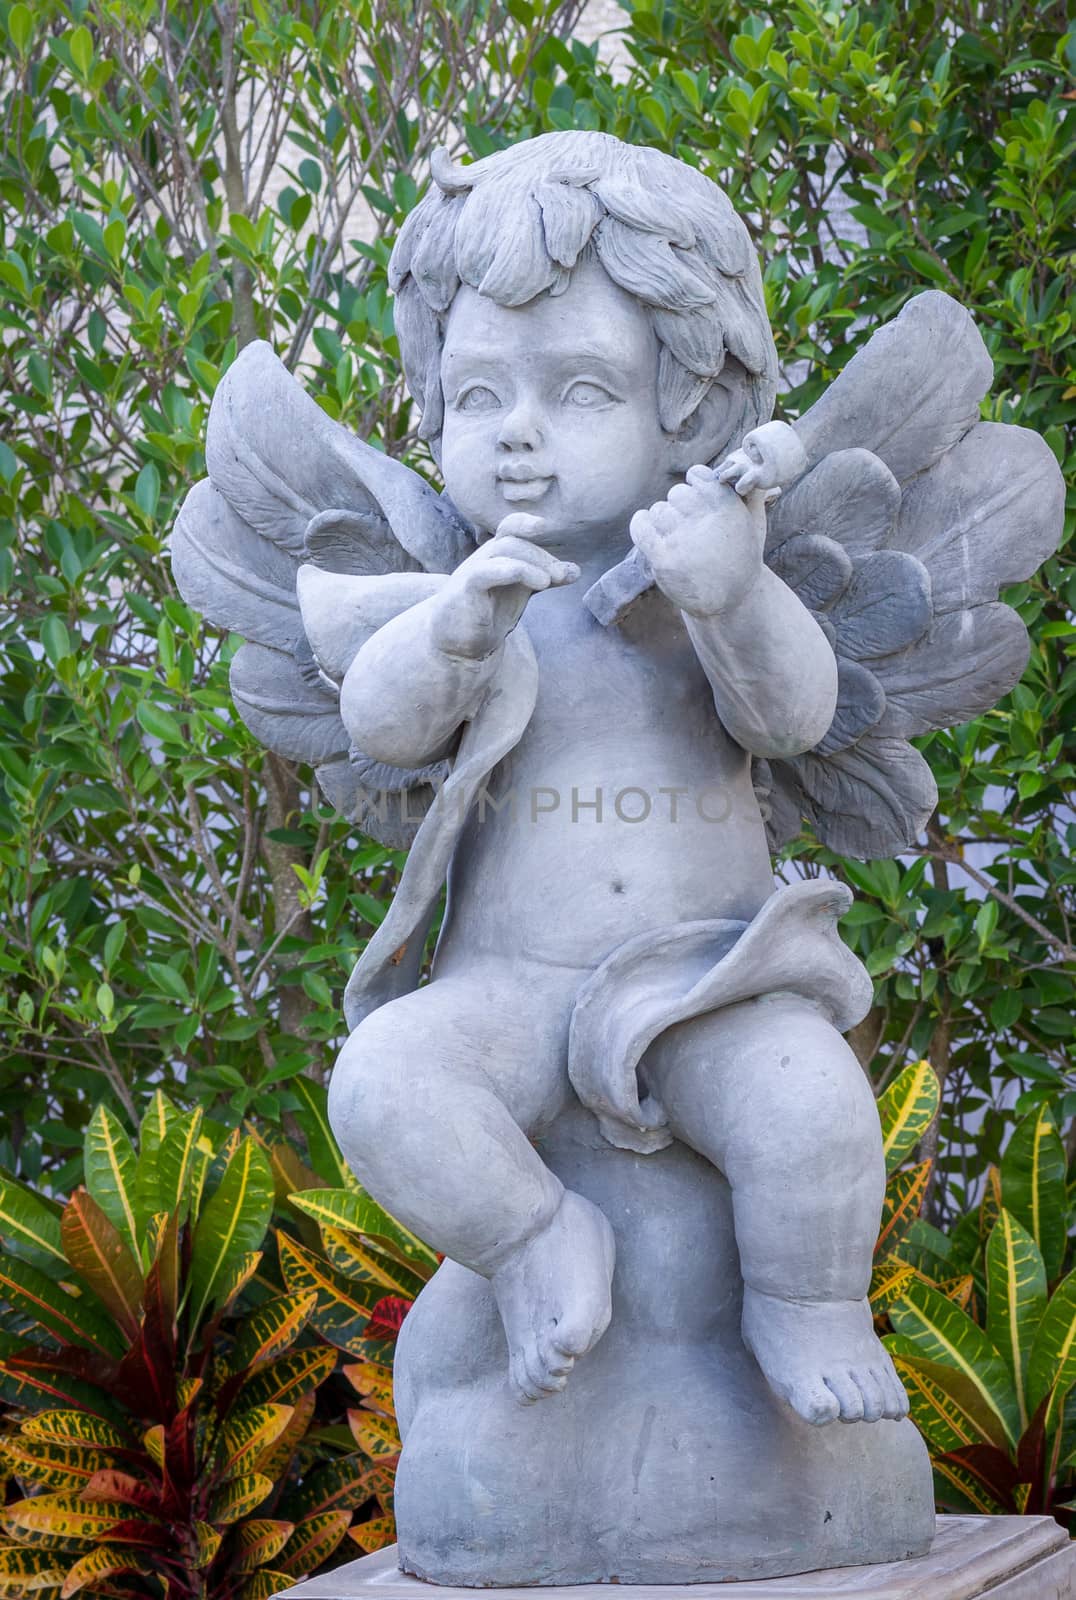 Cupid sculpture by seksan44